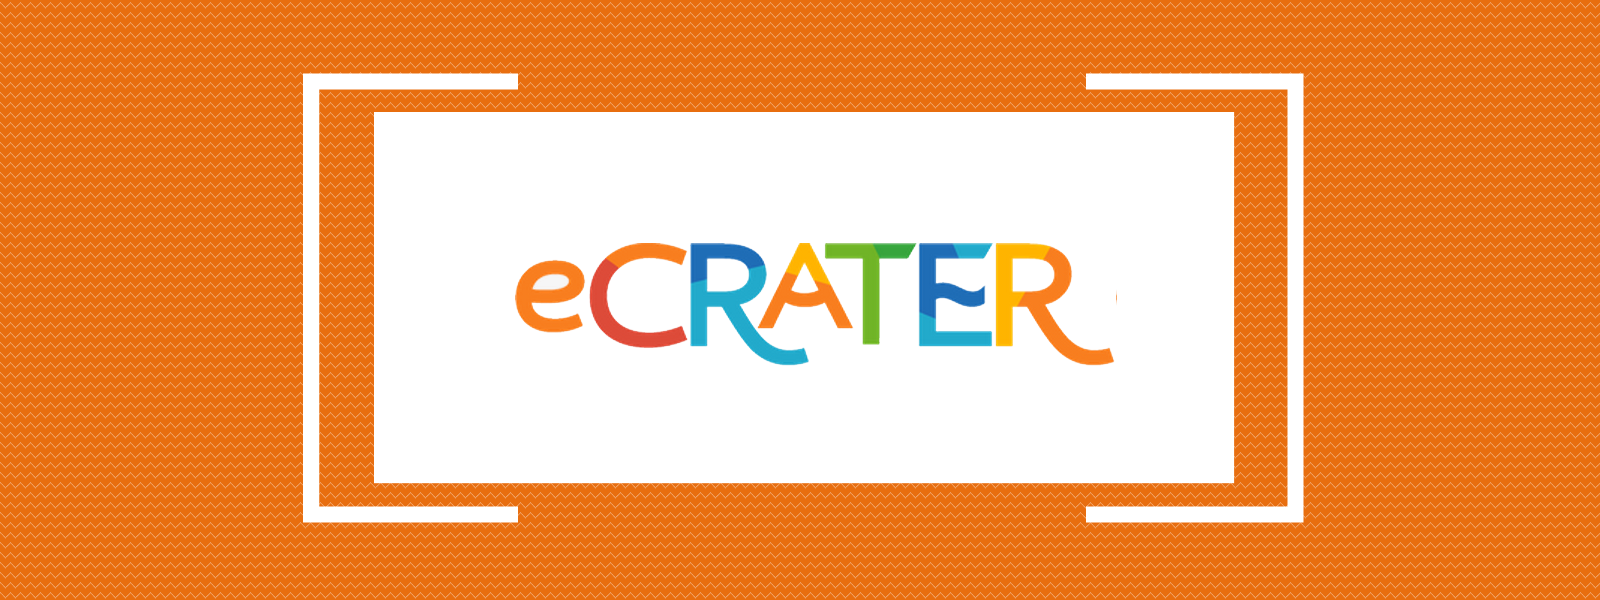 ecrater-banner